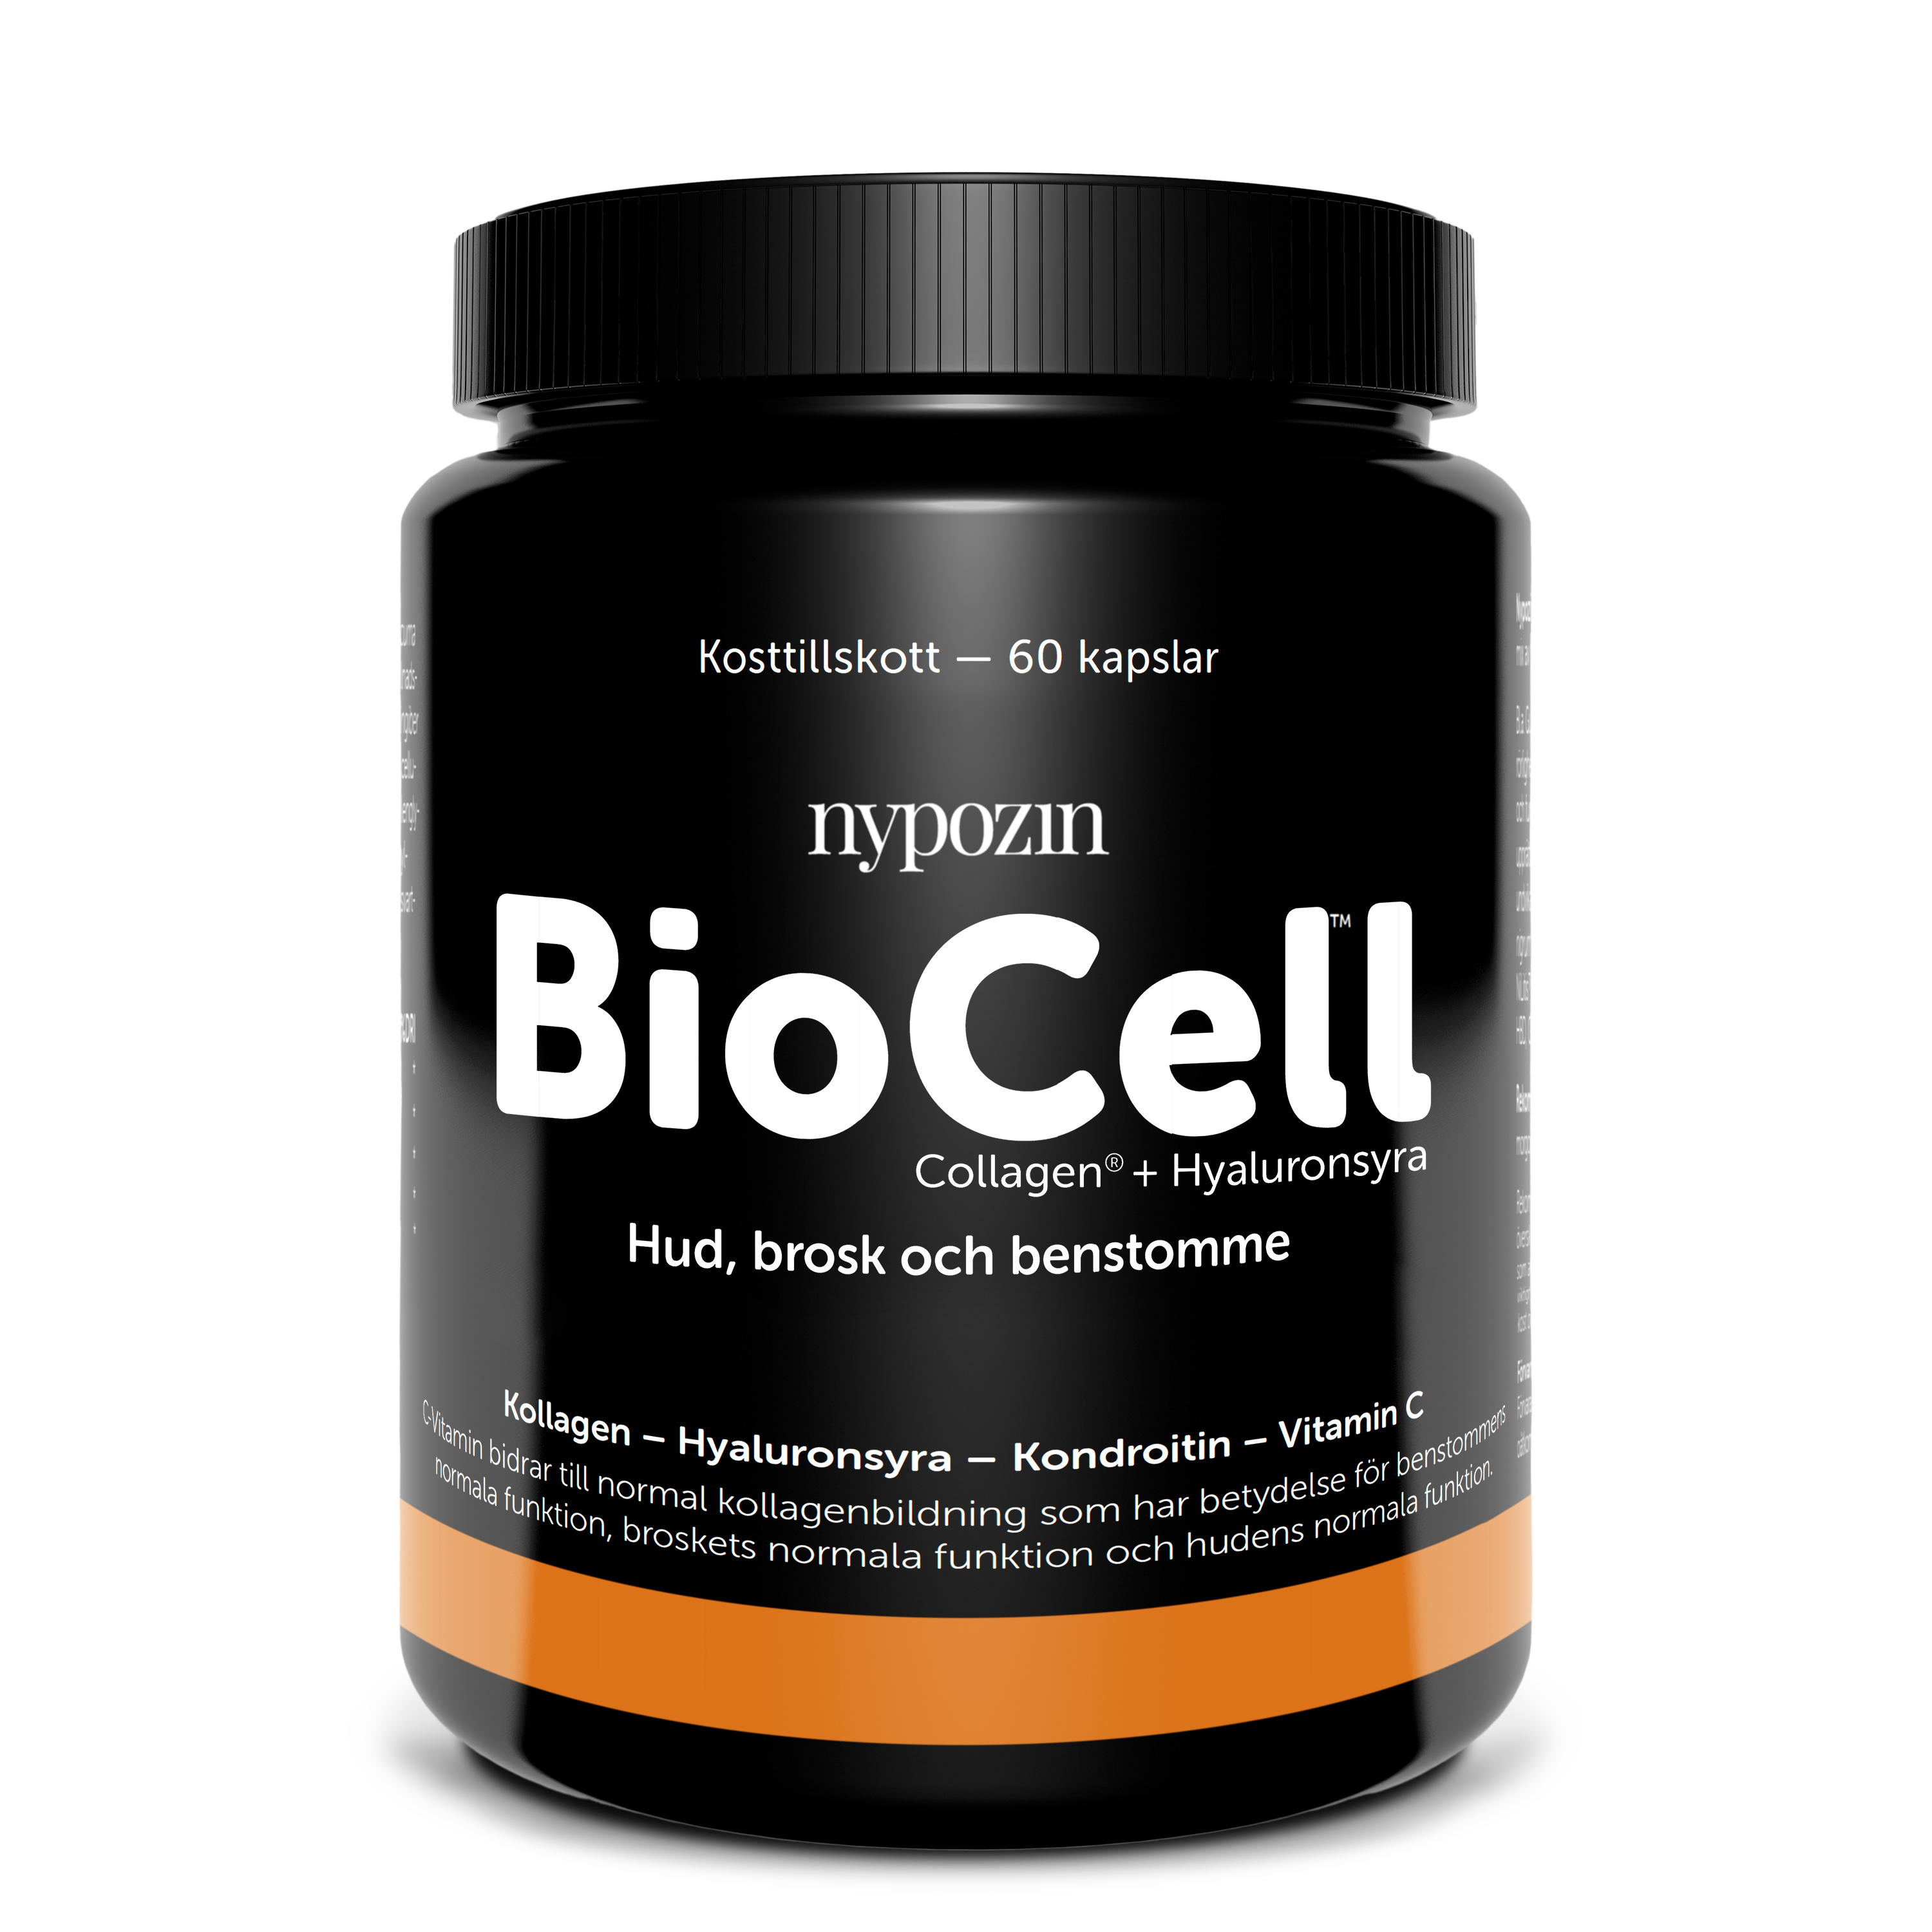 Nypozin Biocell 60 kapslar